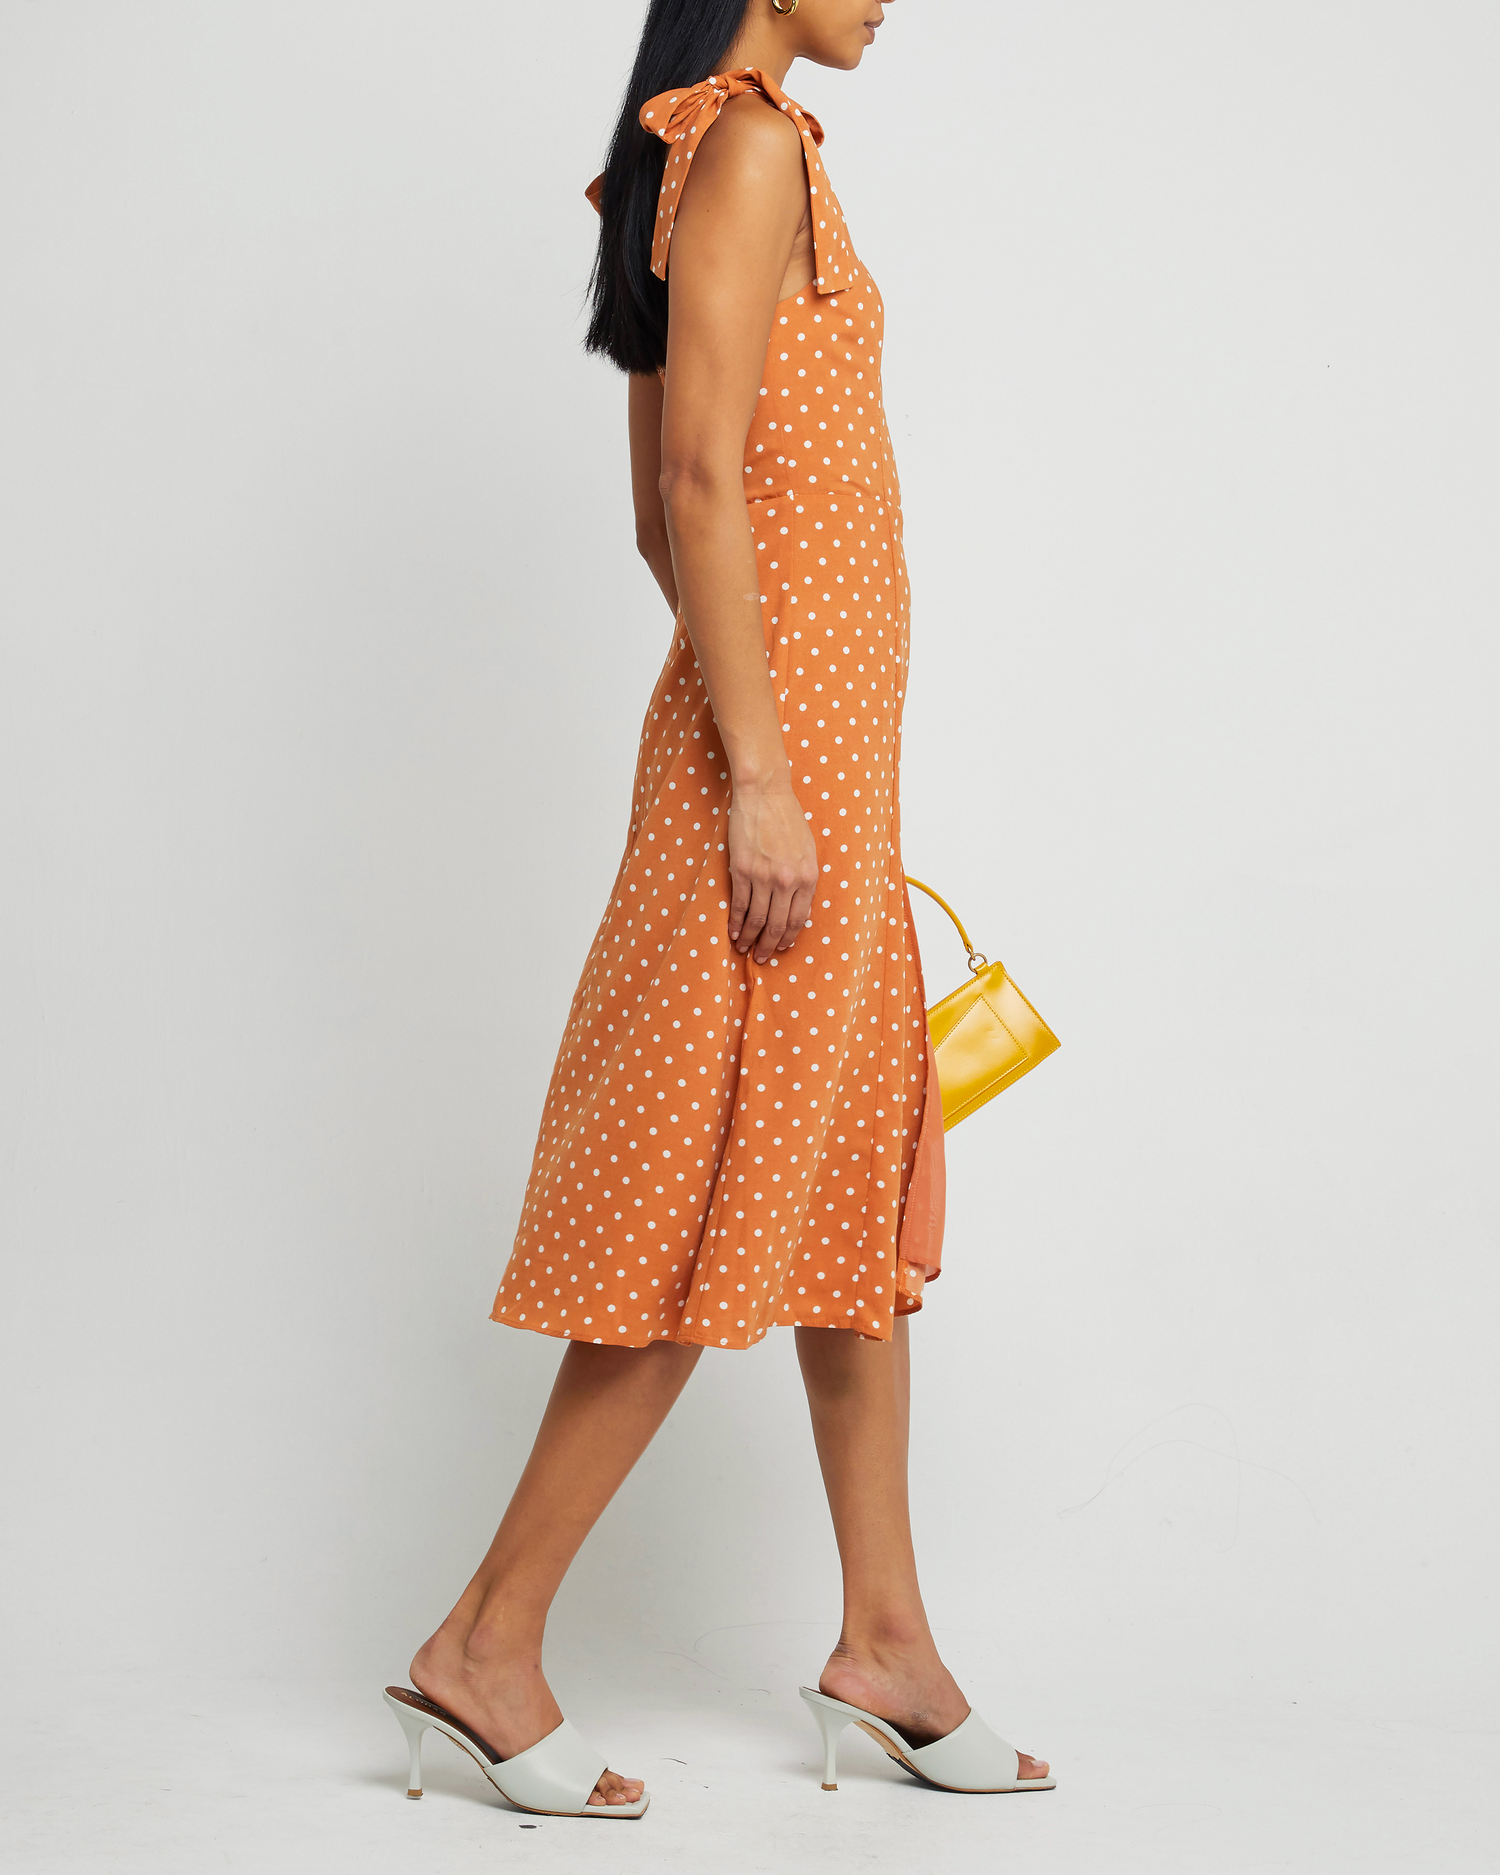 Third image of Sasha Dress, a orange midi dress, side slit, tie straps, bow, ribbon, polka dot